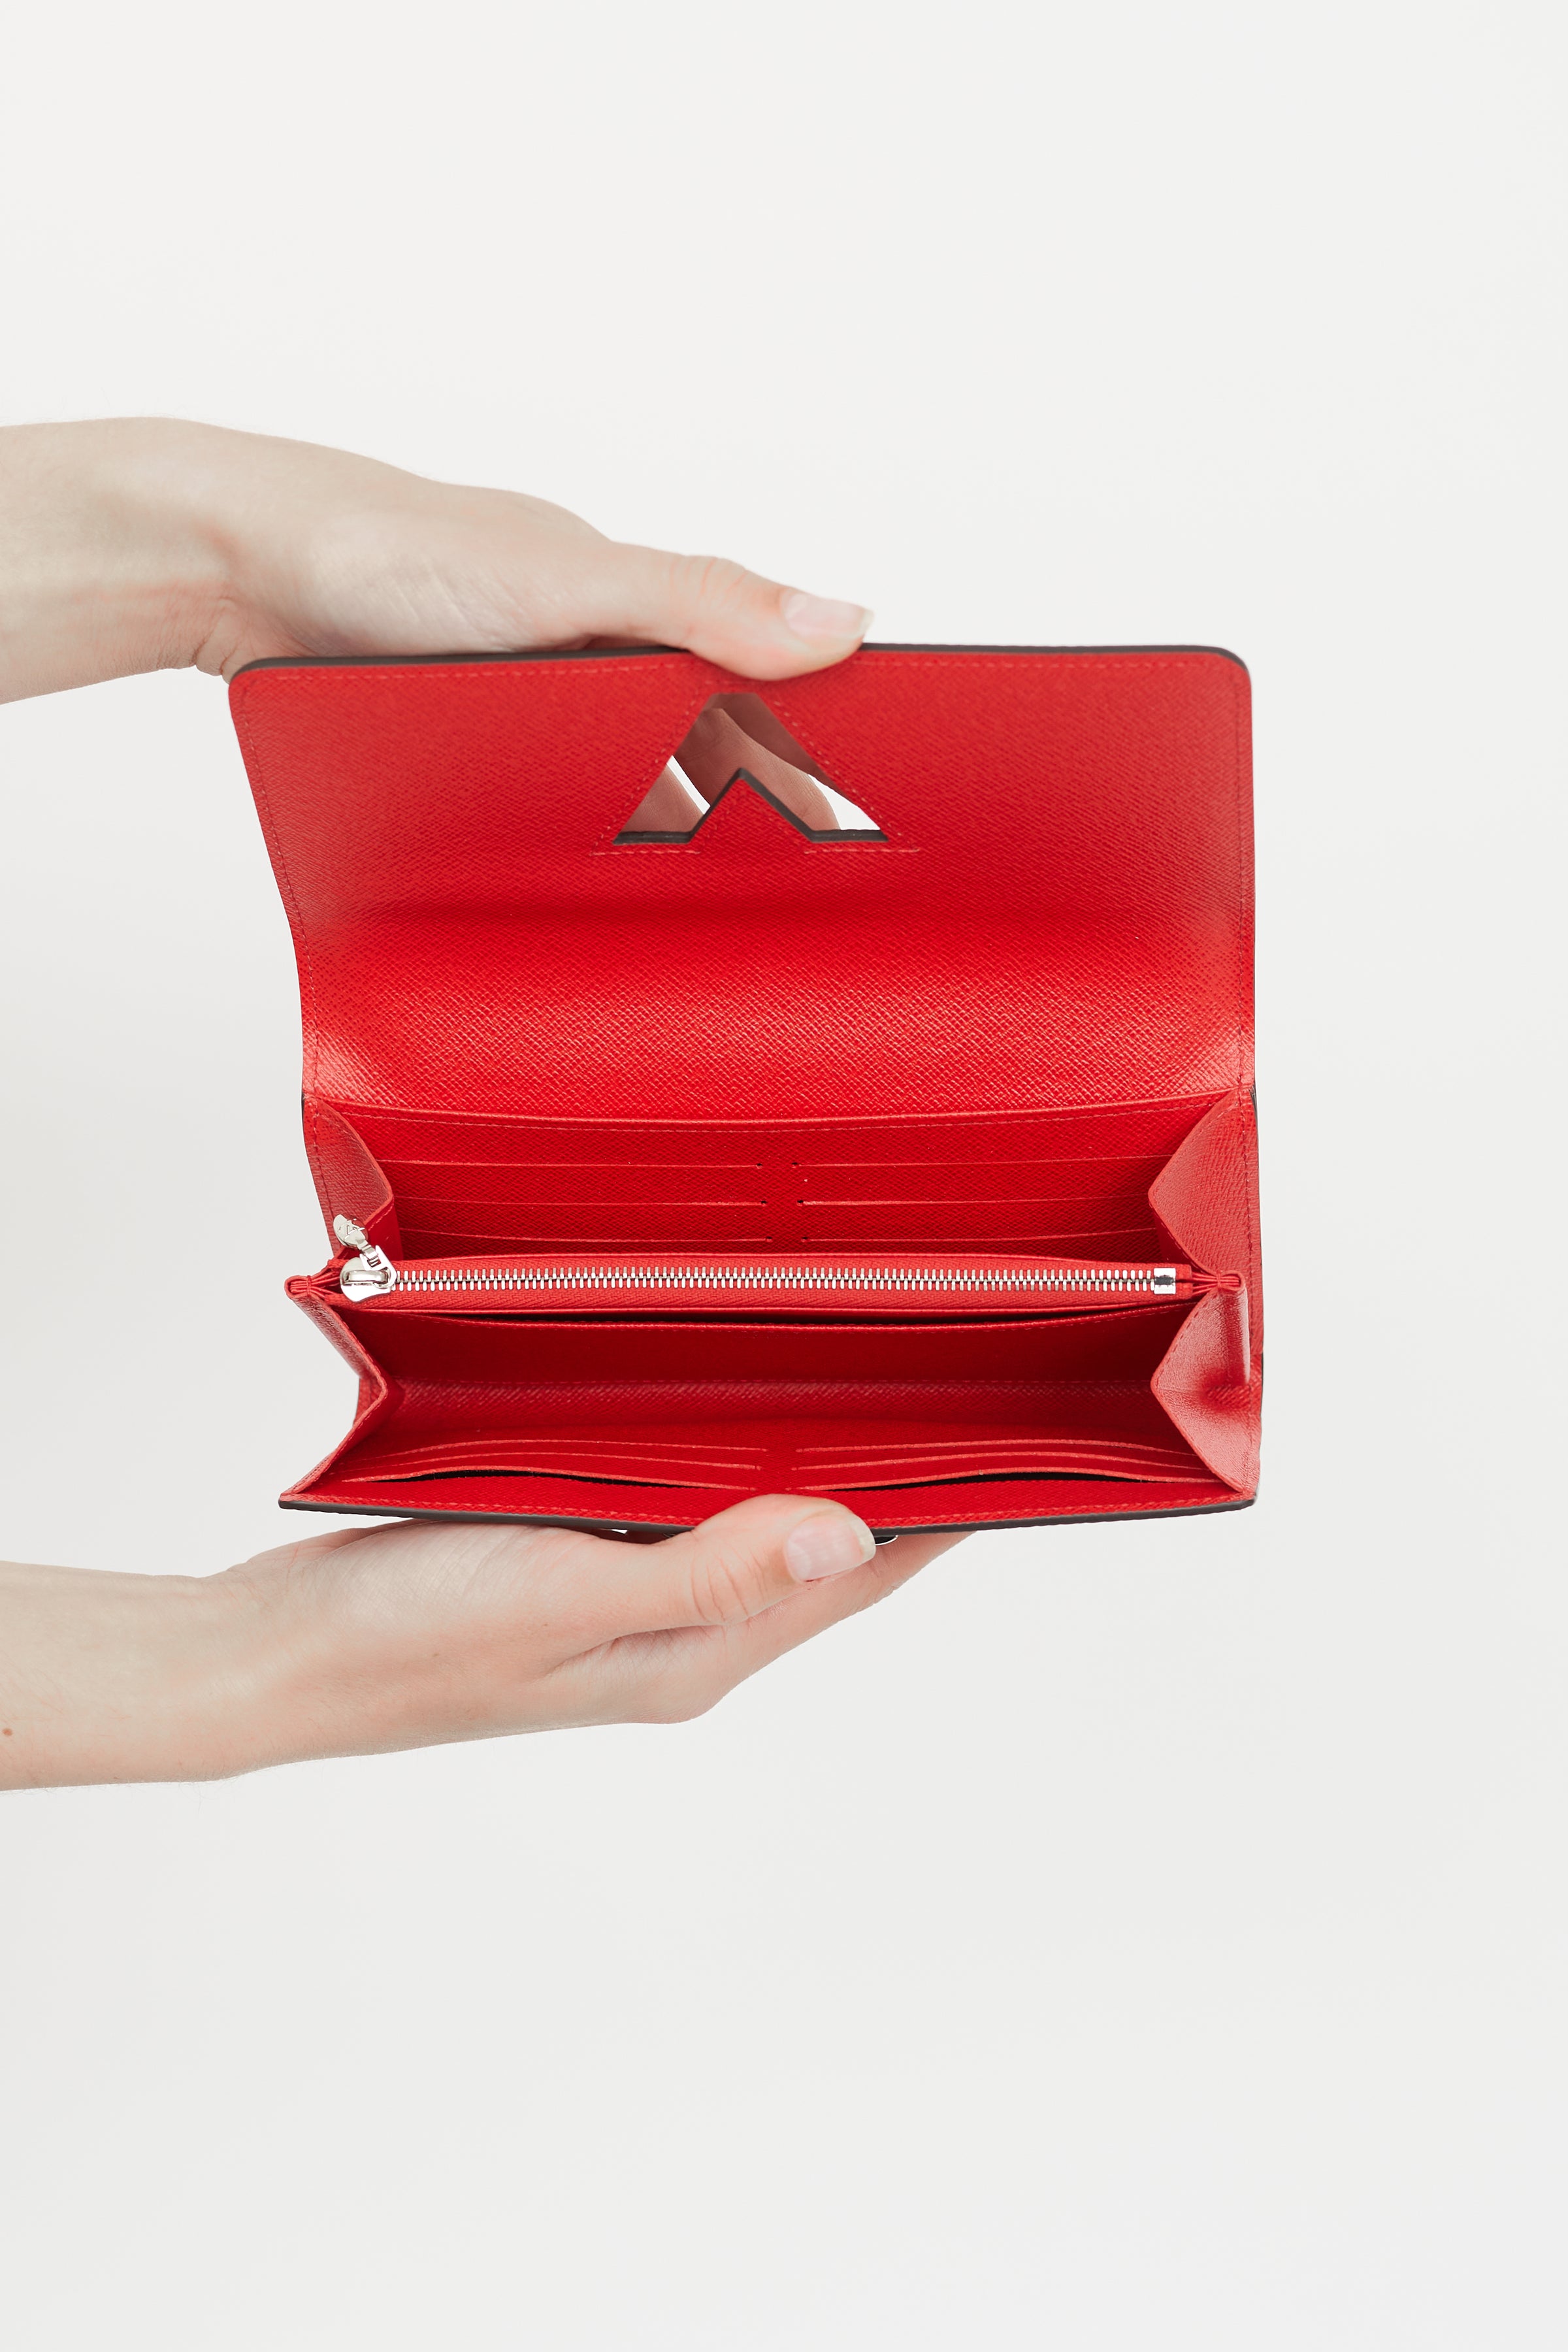 Louis Vuitton Red Epi Leather Lockit Vertical bag 382205